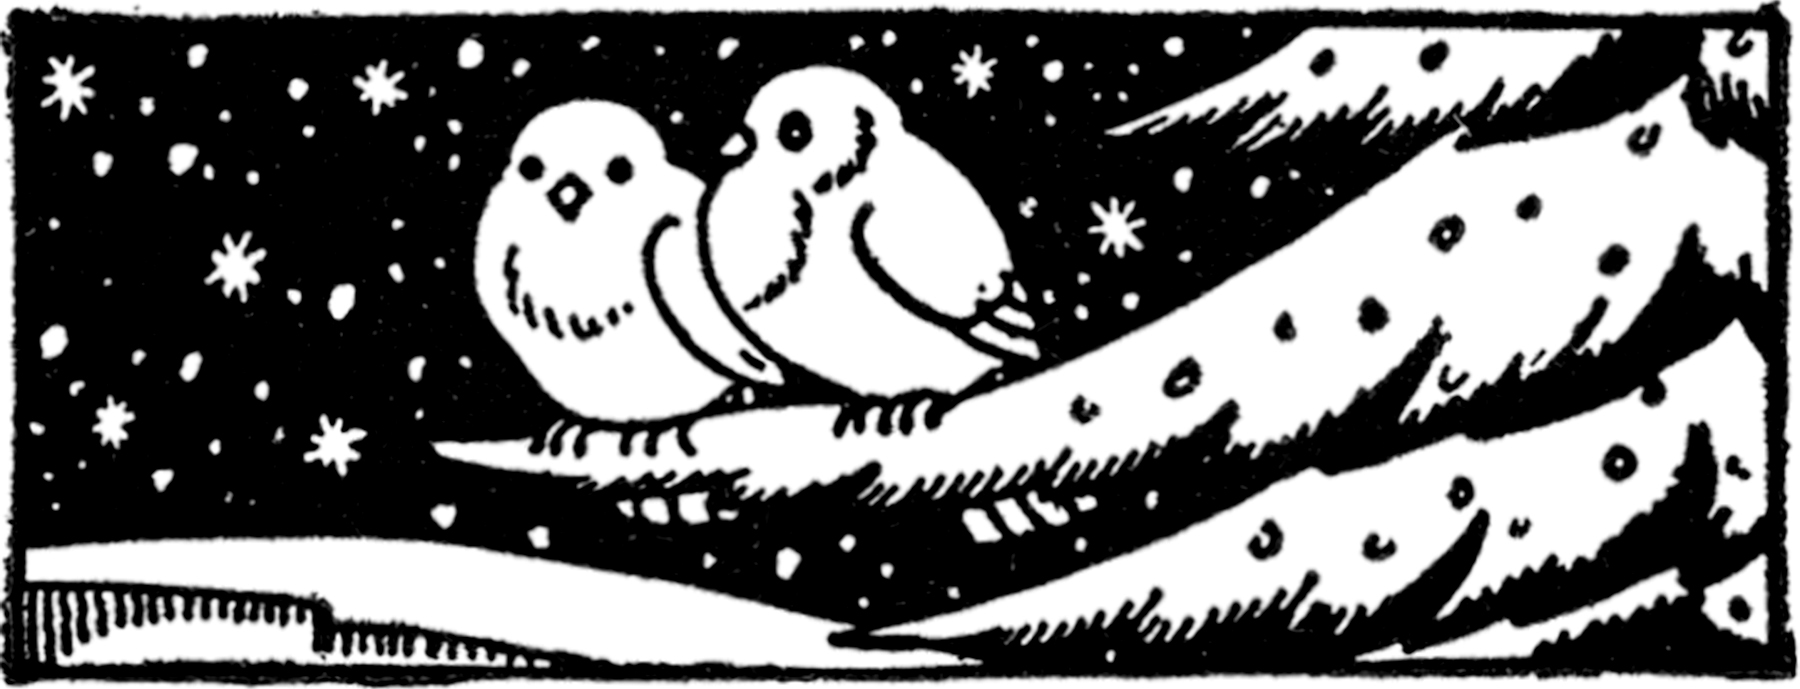 https://thegraphicsfairy.com/wp-content/uploads/2020/11/Vintage-Winter-Birds-Image-GraphicsFairy.jpg